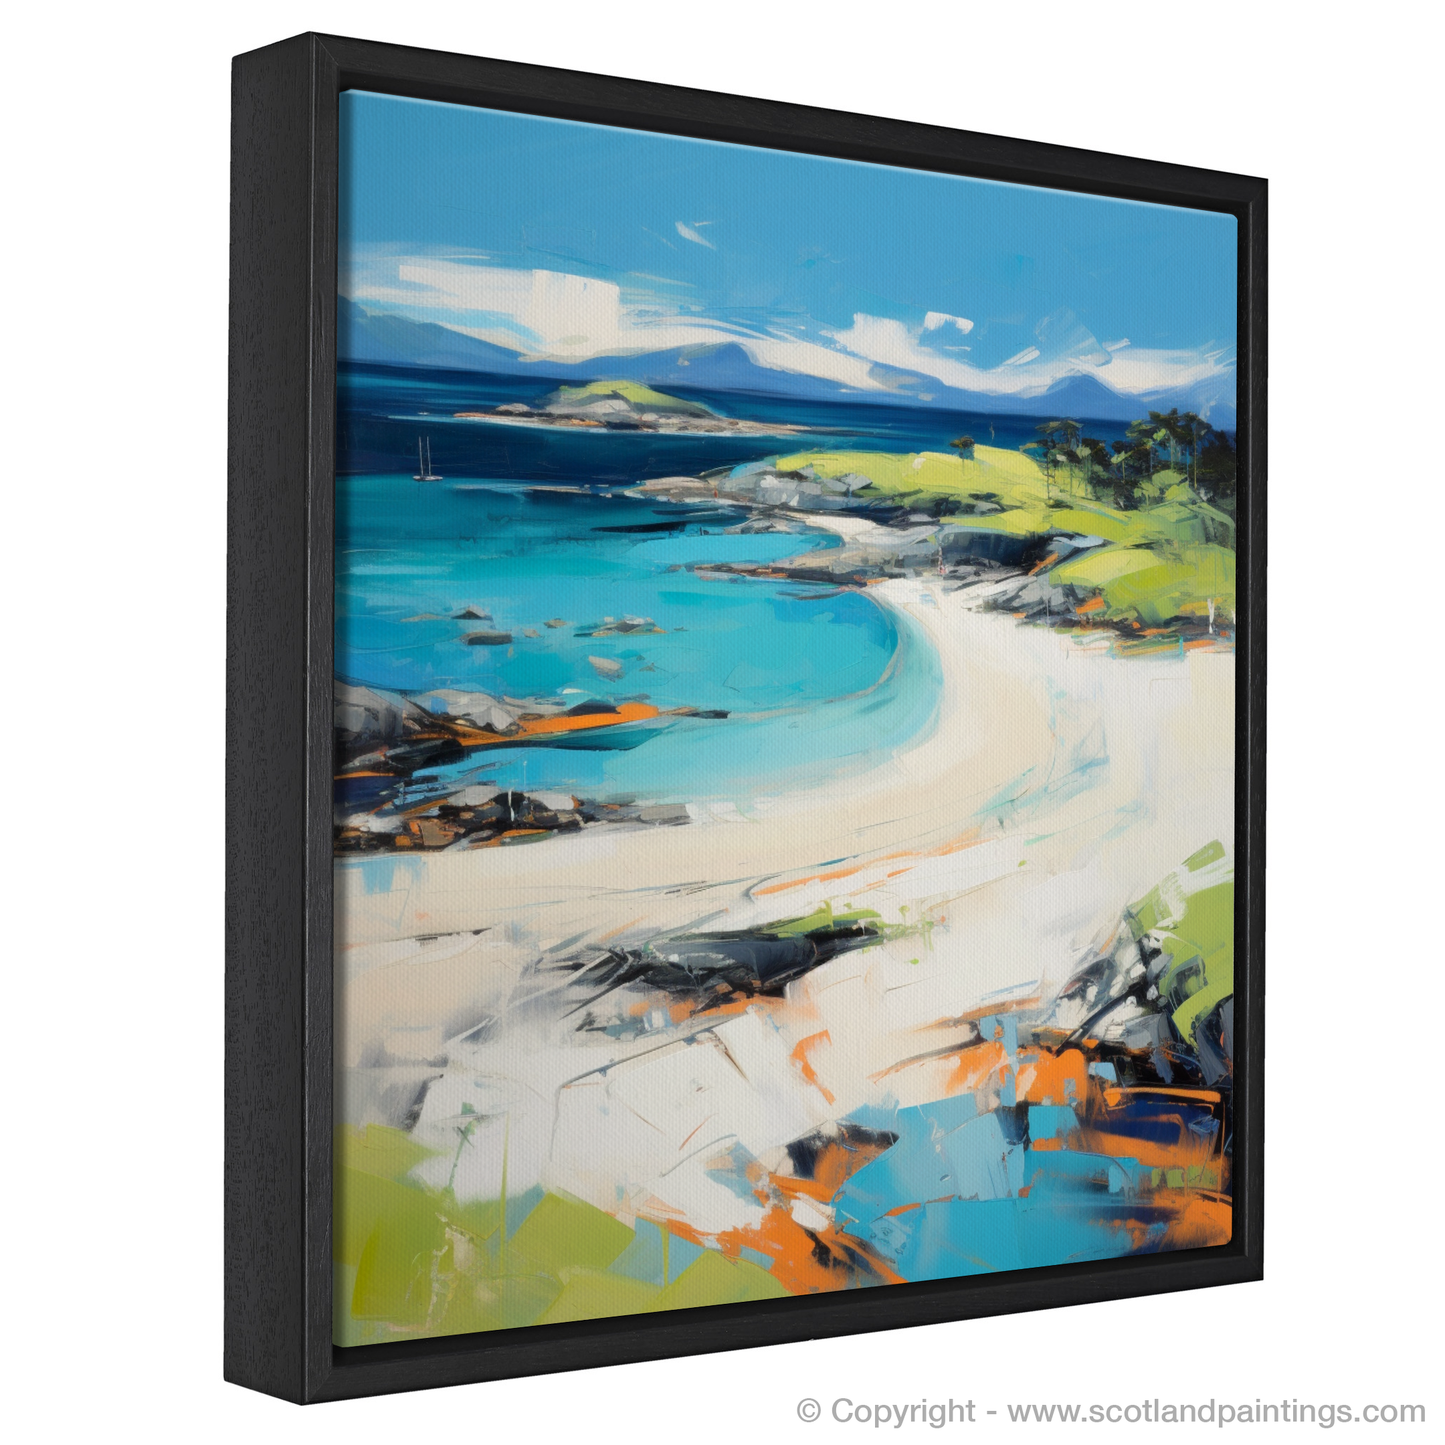 Painting and Art Print of Camusdarach Beach, Arisaig entitled "Essence of Camusdarach: An Abstract Impression of Scotland's Coastal Gem".